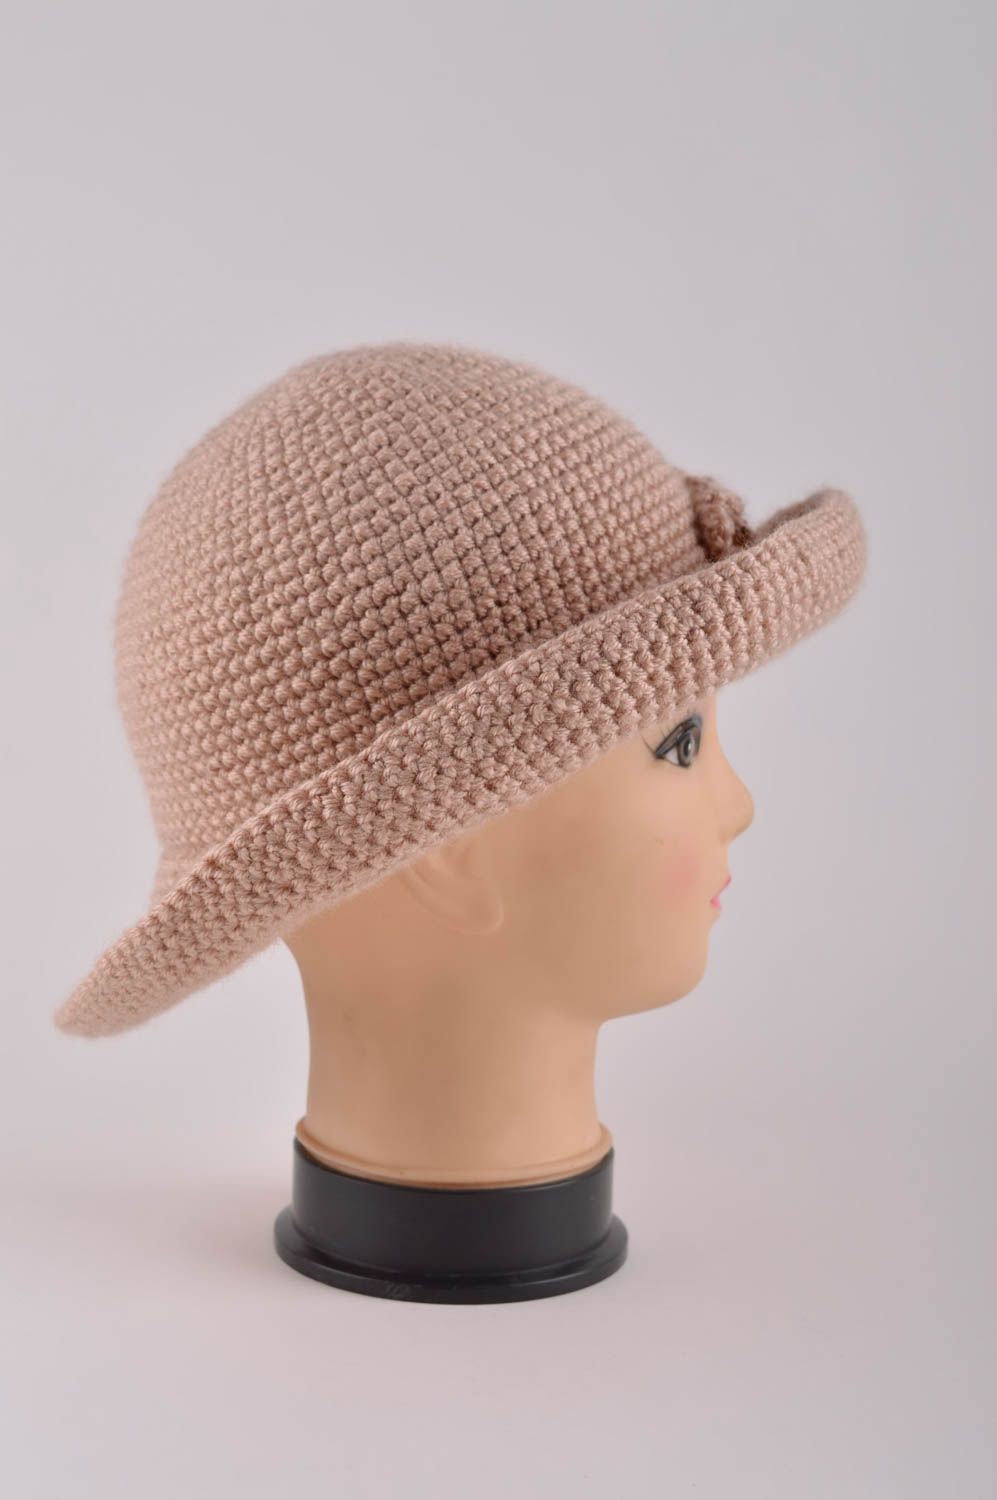 Handmade sun hat ladies sun hat fashion accessories gifts for women summer hat photo 4